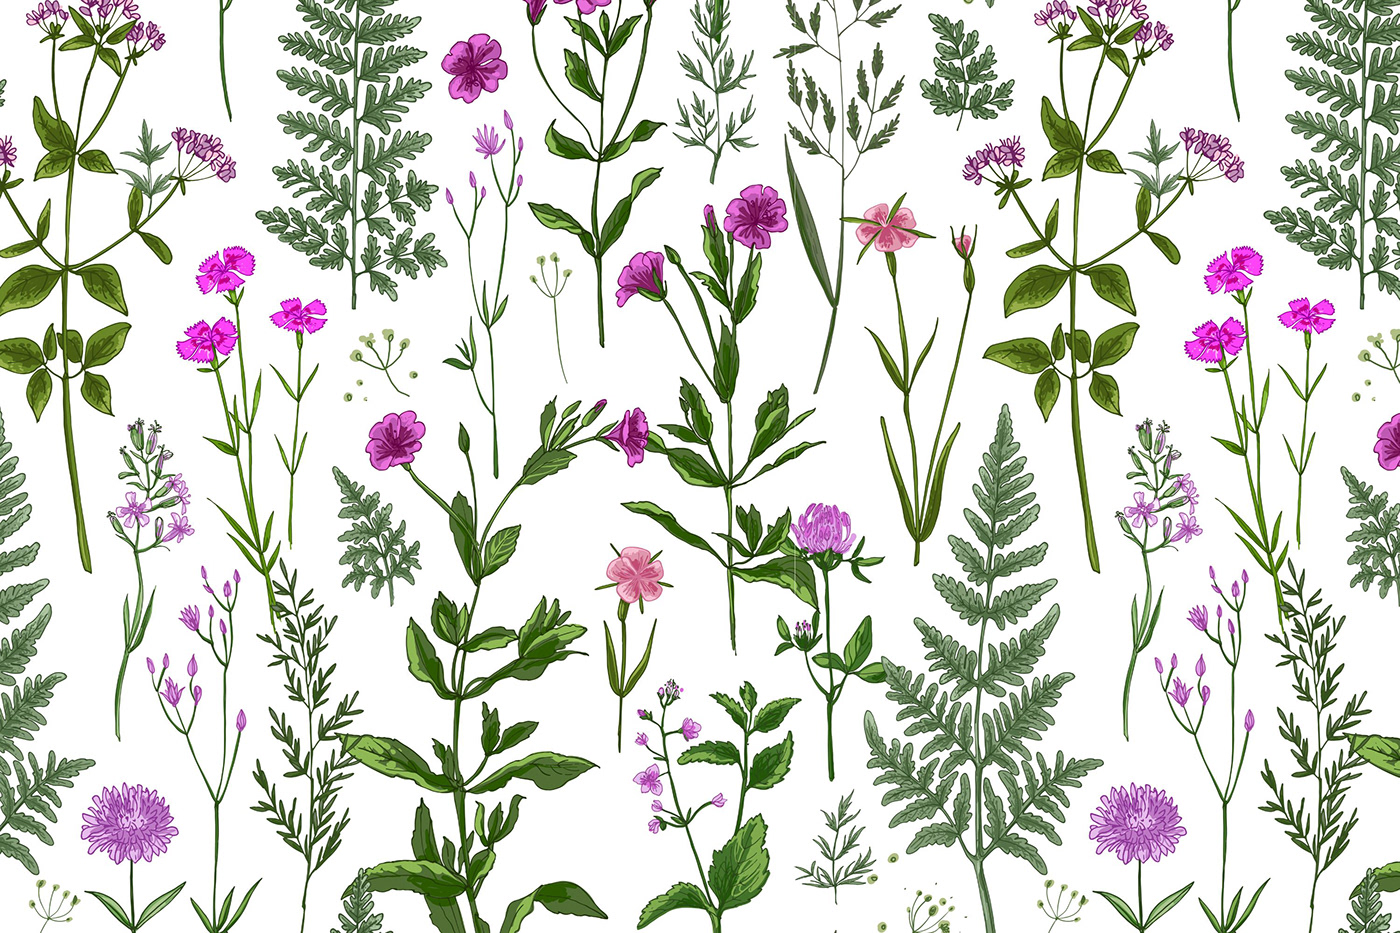 clipart Digital Art  digital illustration Drawing  Flowers Nature png sketch vector wild herbs